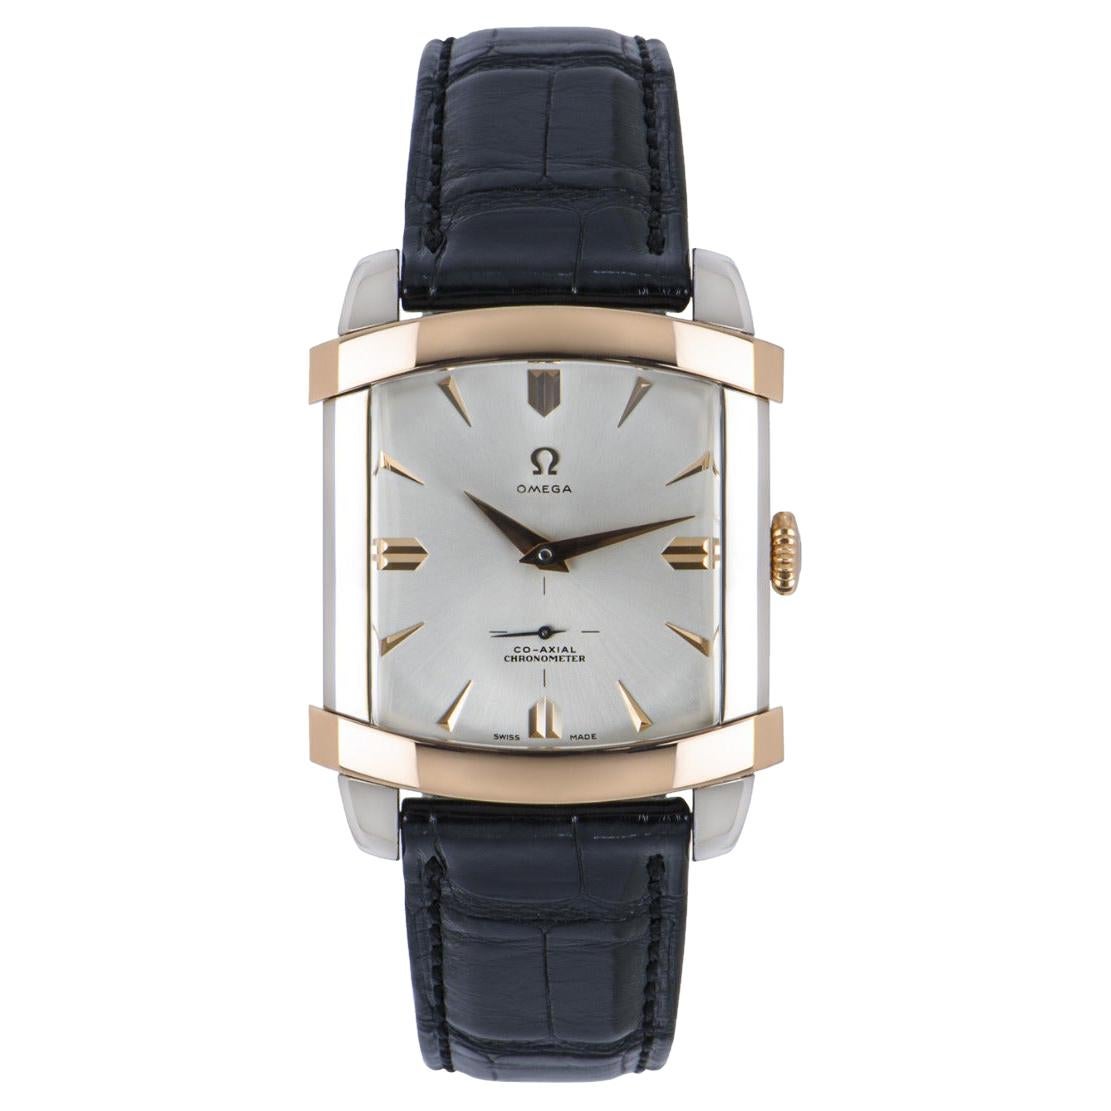 Omega Museum Tonneau Renverse 1952 5705.30.01 Limited Edition Watch